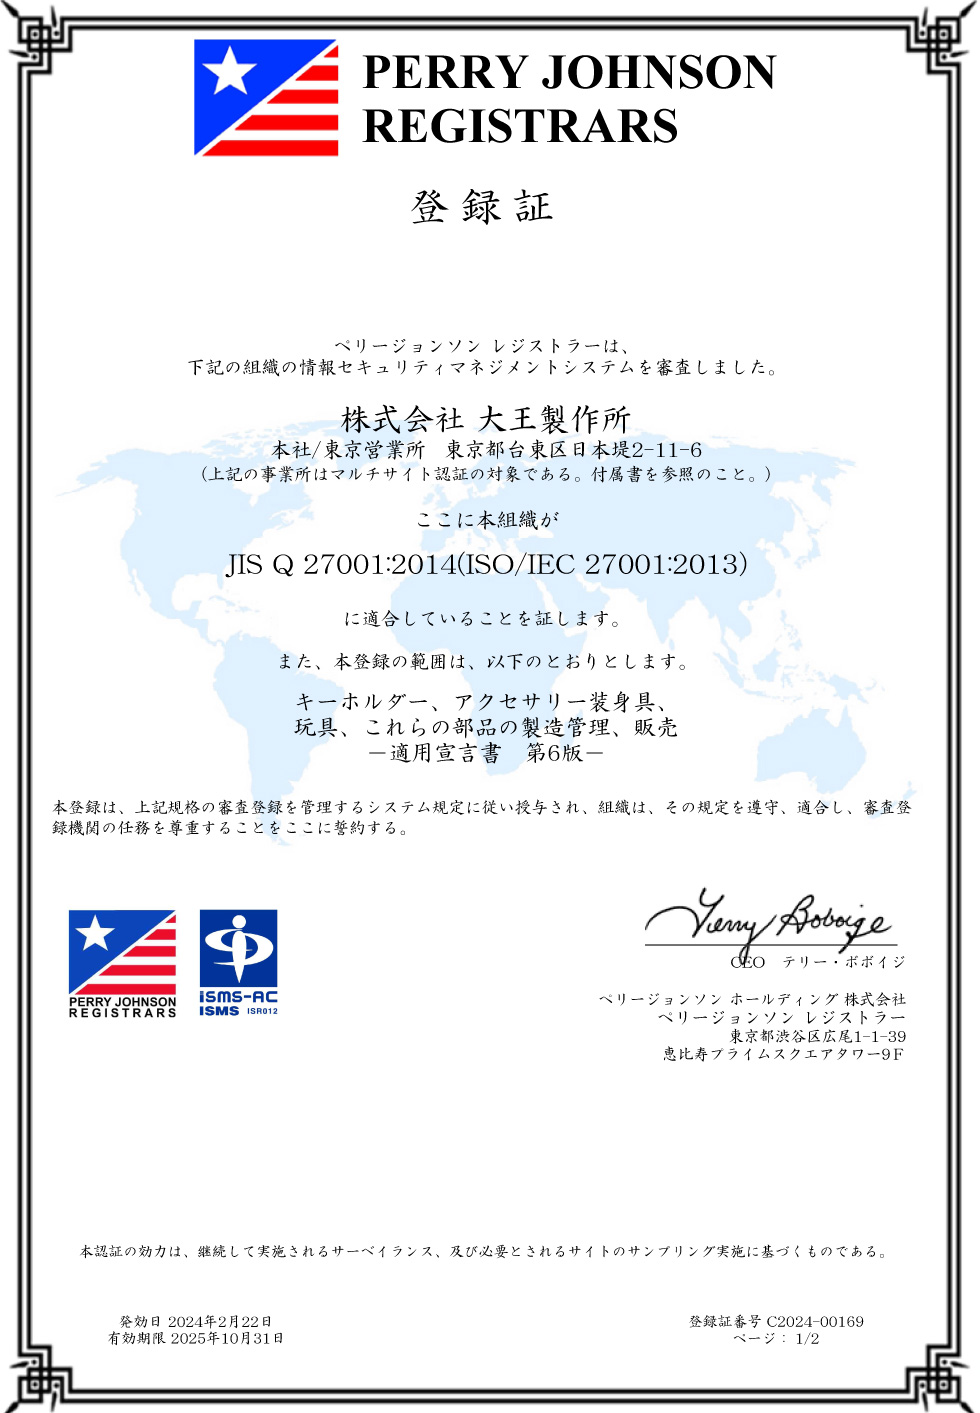 iso27001 registration certificate